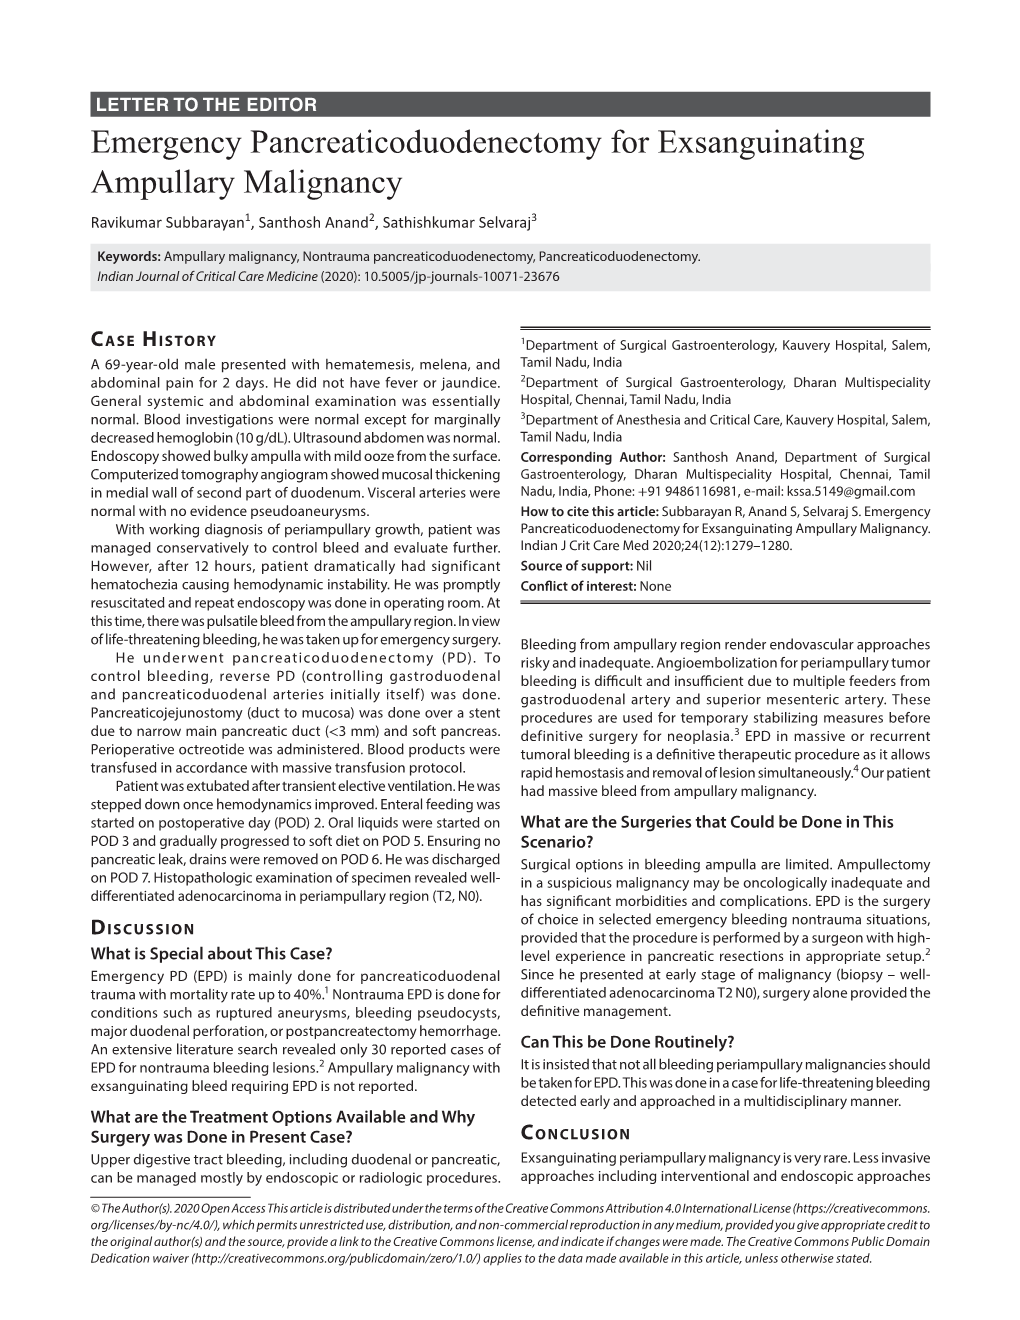 Emergency Pancreaticoduodenectomy for Exsanguinating Ampullary Malignancy Ravikumar Subbarayan1, Santhosh Anand2, Sathishkumar Selvaraj3